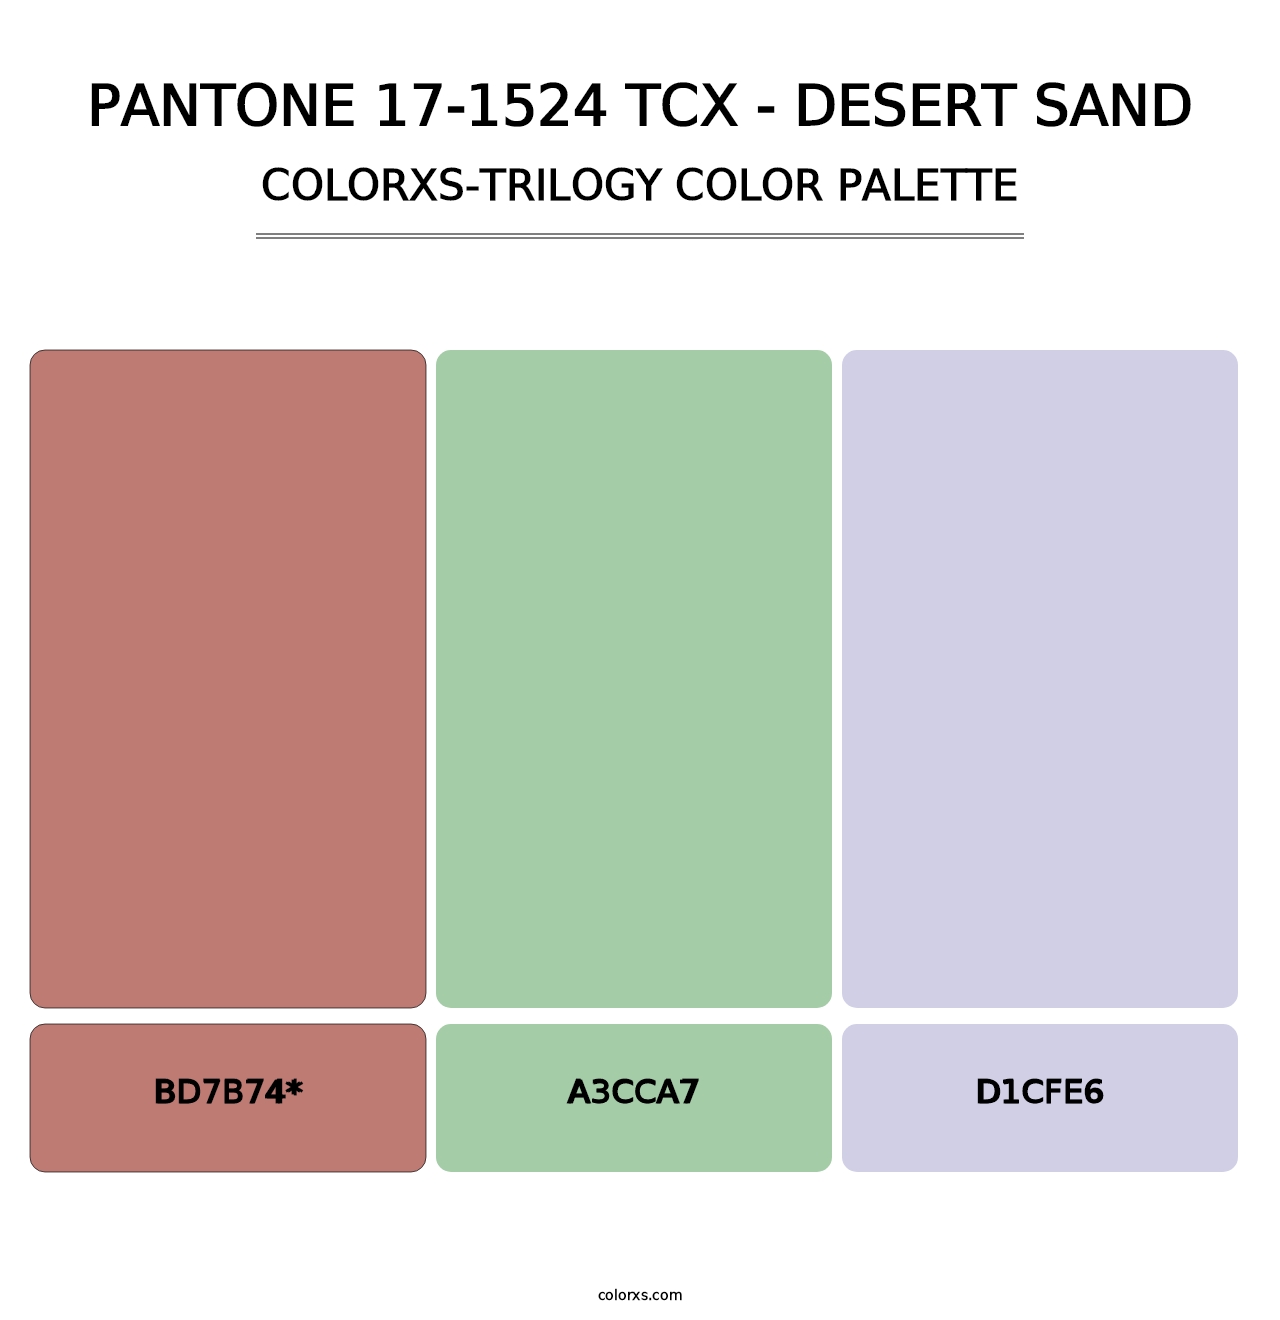 PANTONE 17-1524 TCX - Desert Sand - Colorxs Trilogy Palette